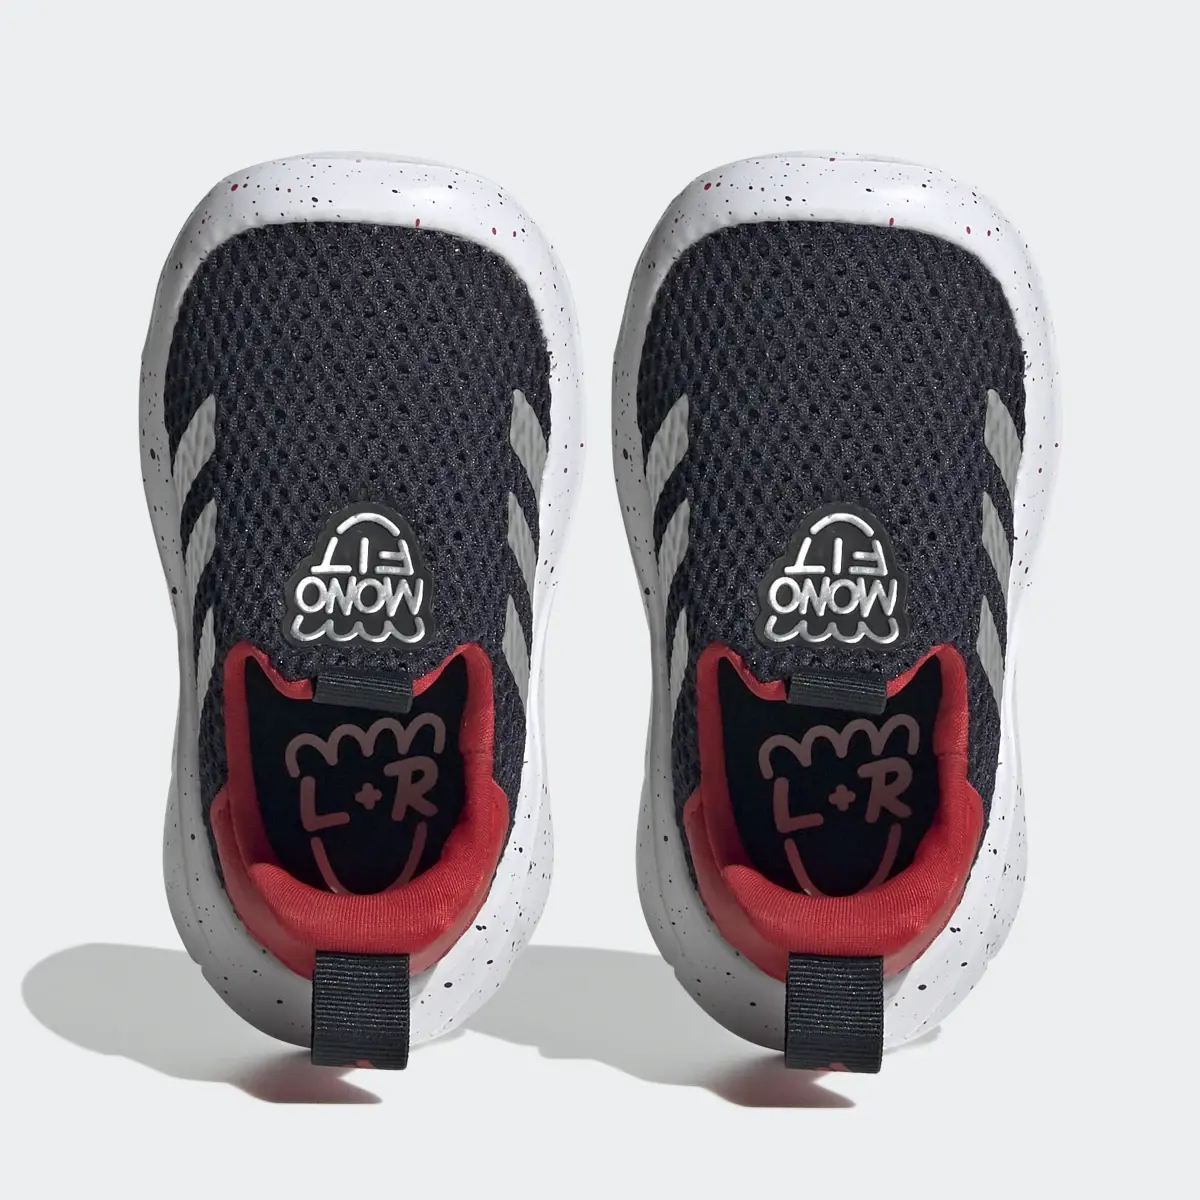 Adidas Scarpe MONOFIT Trainer Lifestyle Slip-on. 3